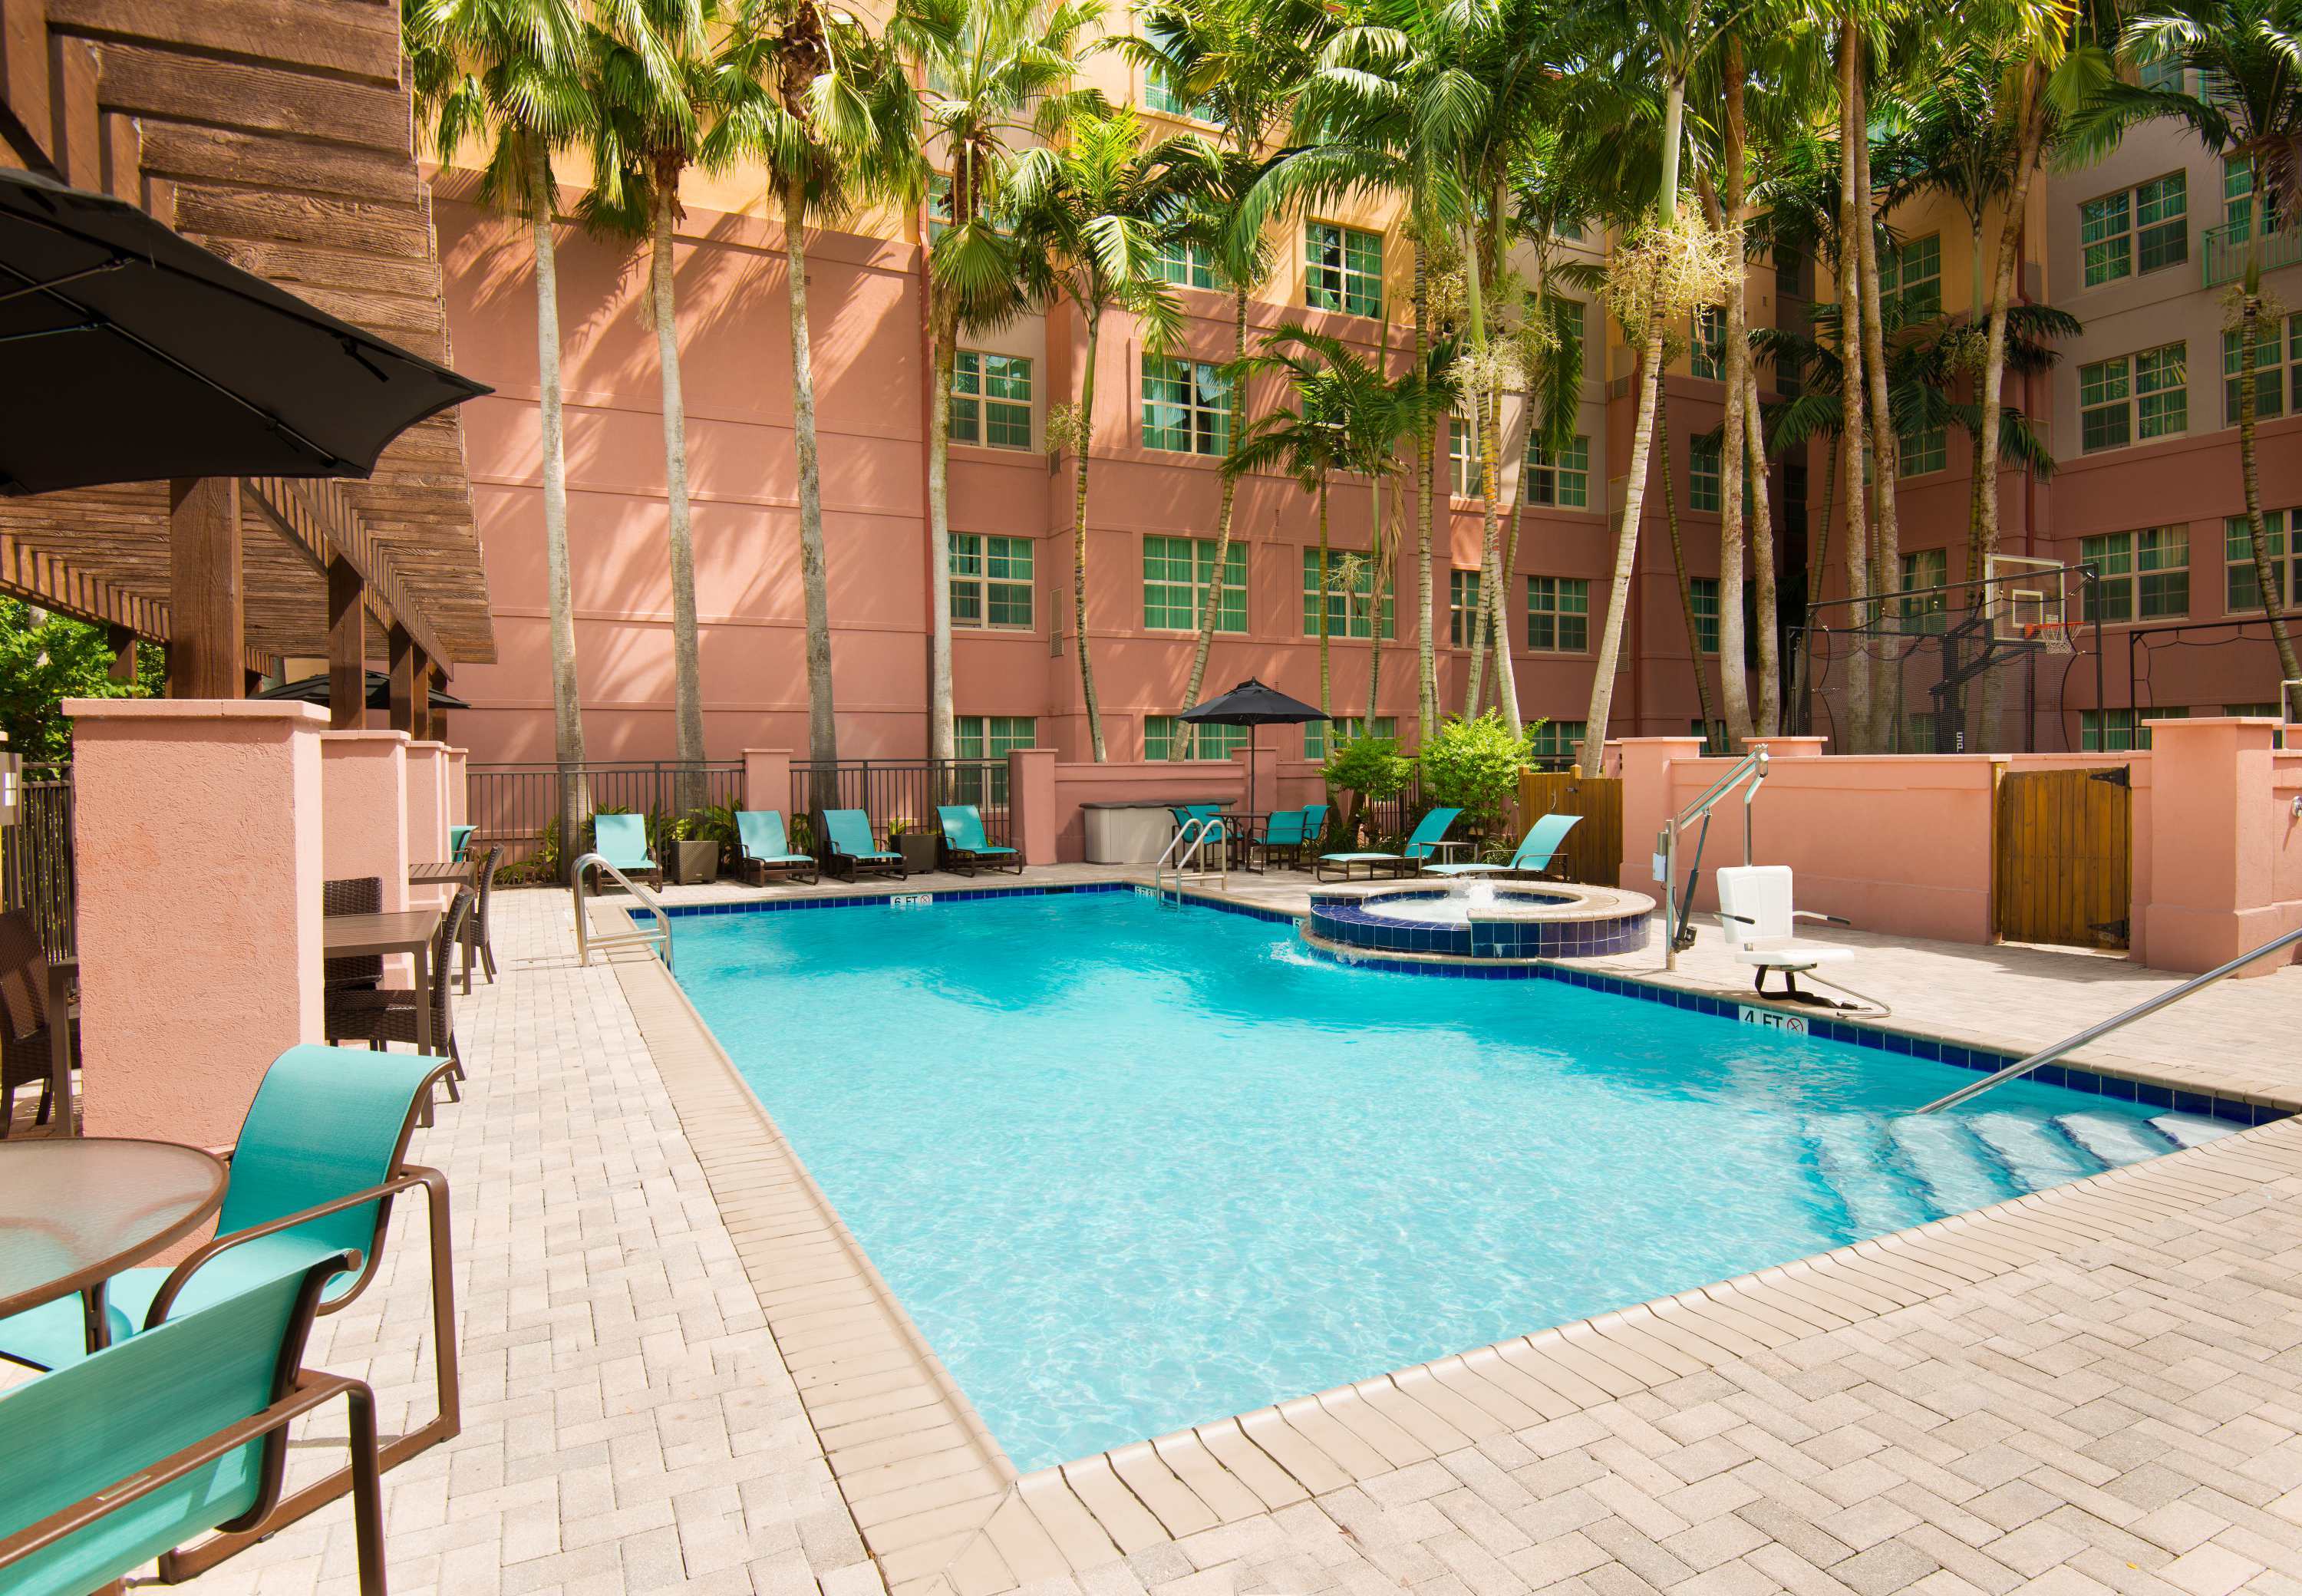 Photo of Residence Inn Fort Lauderdale SW/Miramar, Miramar, FL